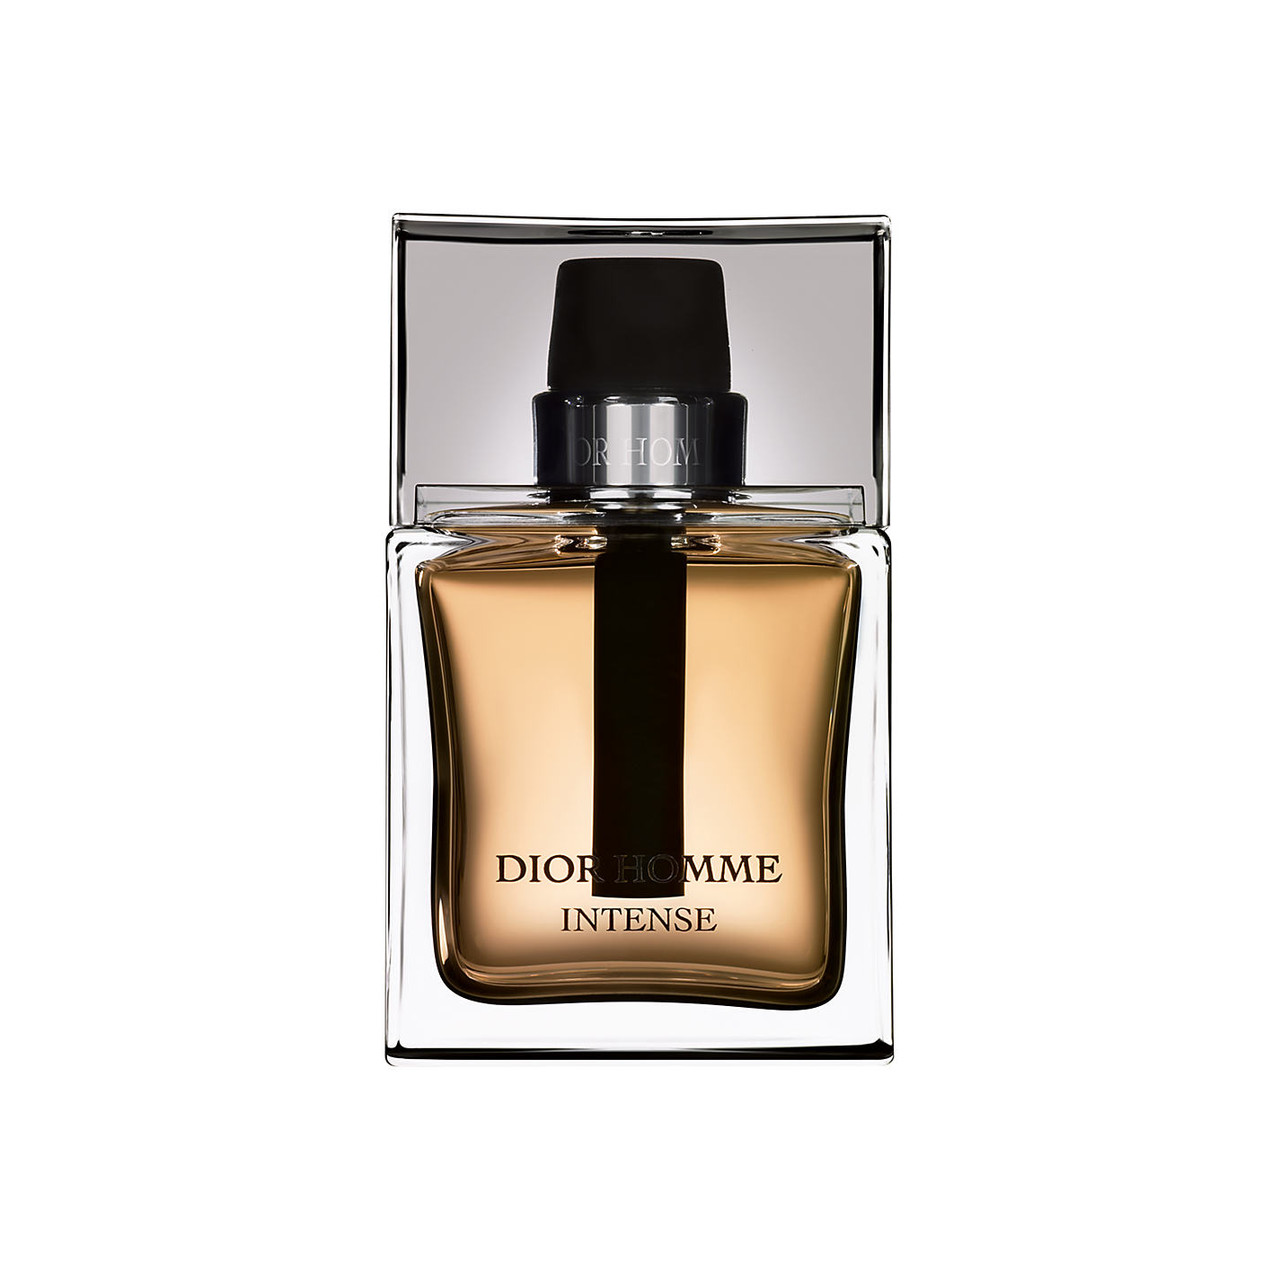 Dior Homme Intense Cologne 1.7 oz / 3.4 oz EDP Spray for MEN by Christian  Dior